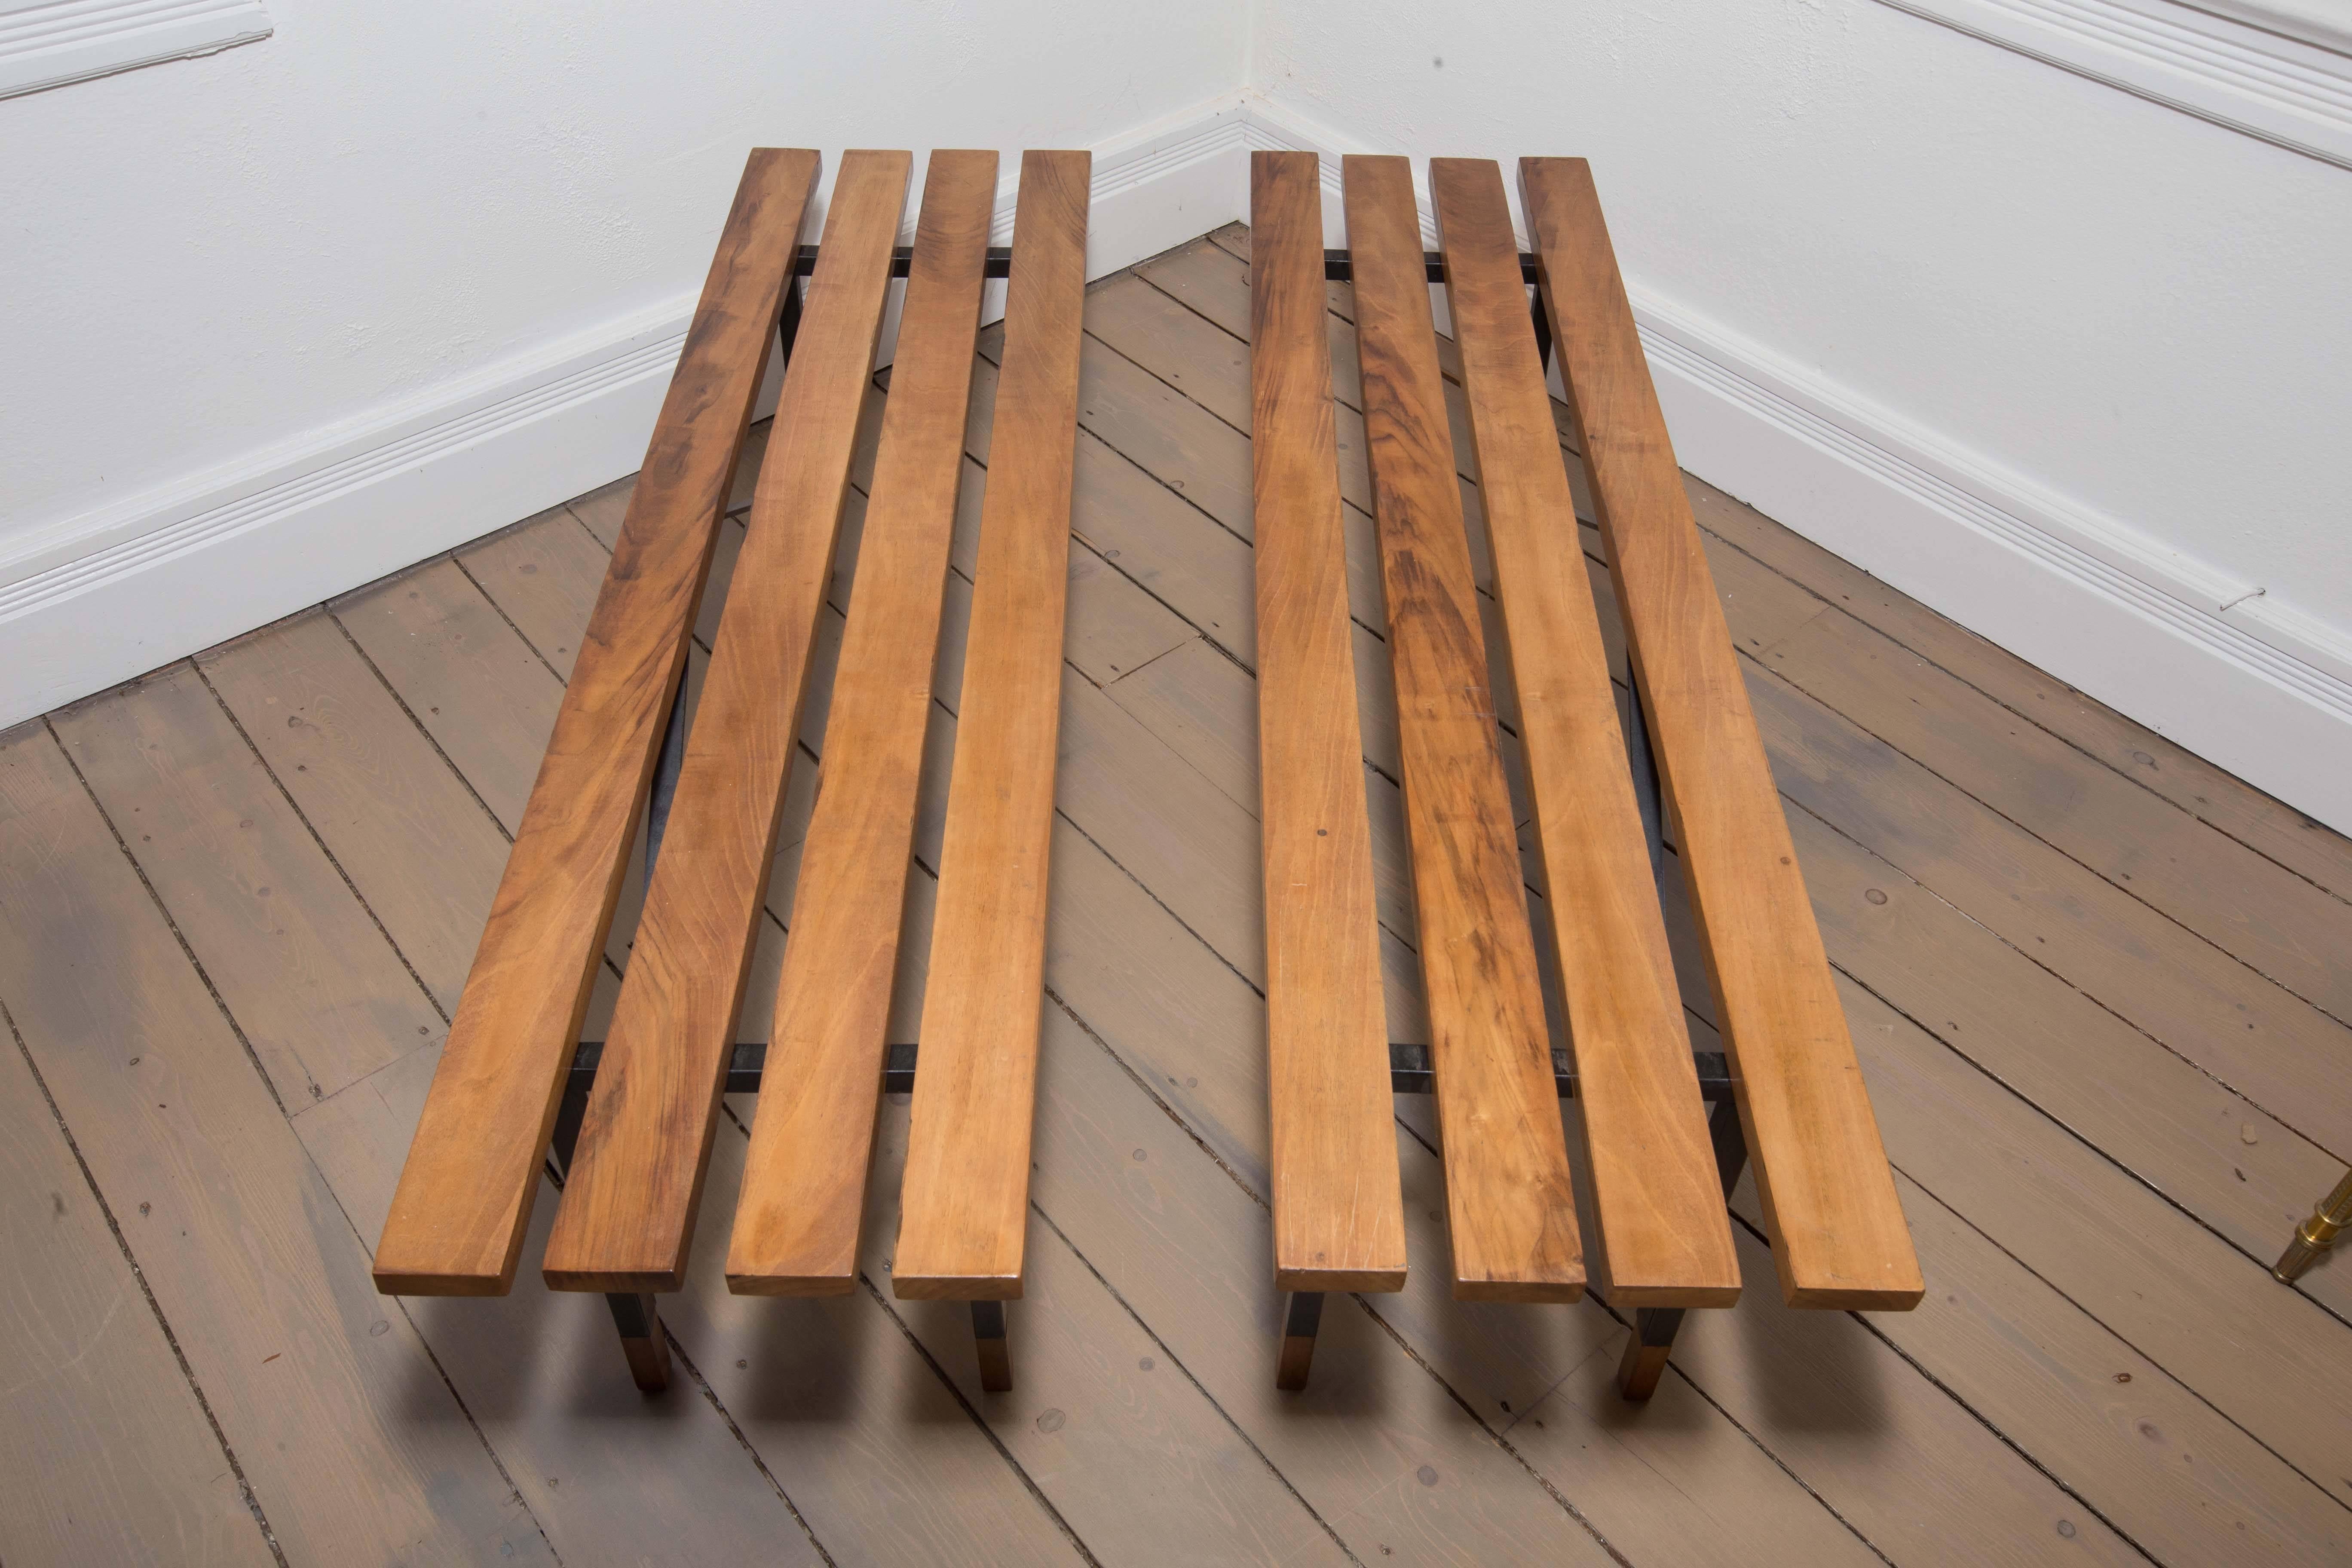 20th Century Wood Slat Bench with Black Metal Cross Bar Base and Wood Feet